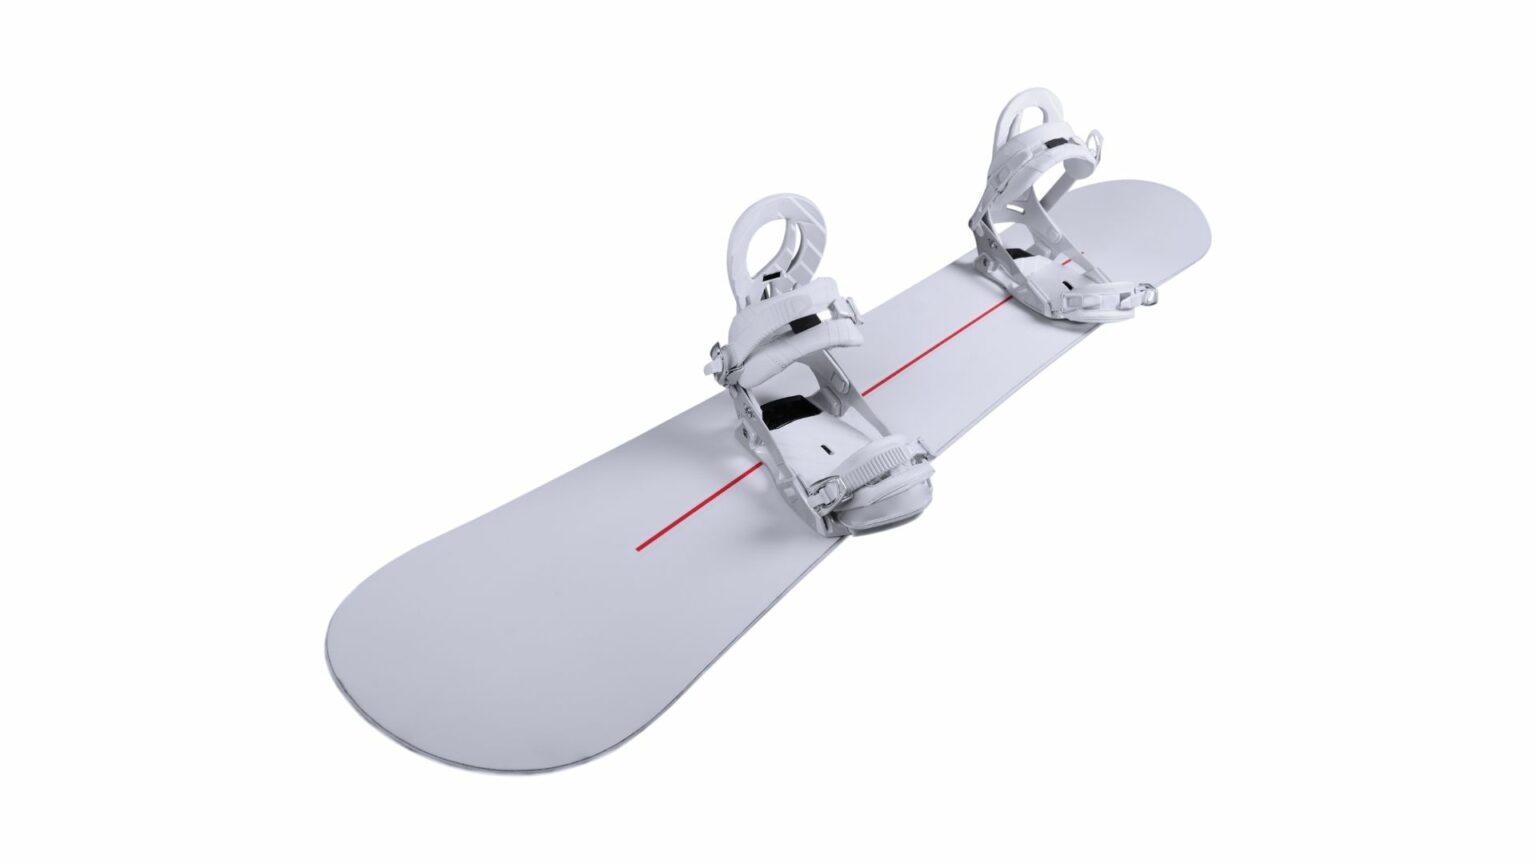 Types of snowboard glides